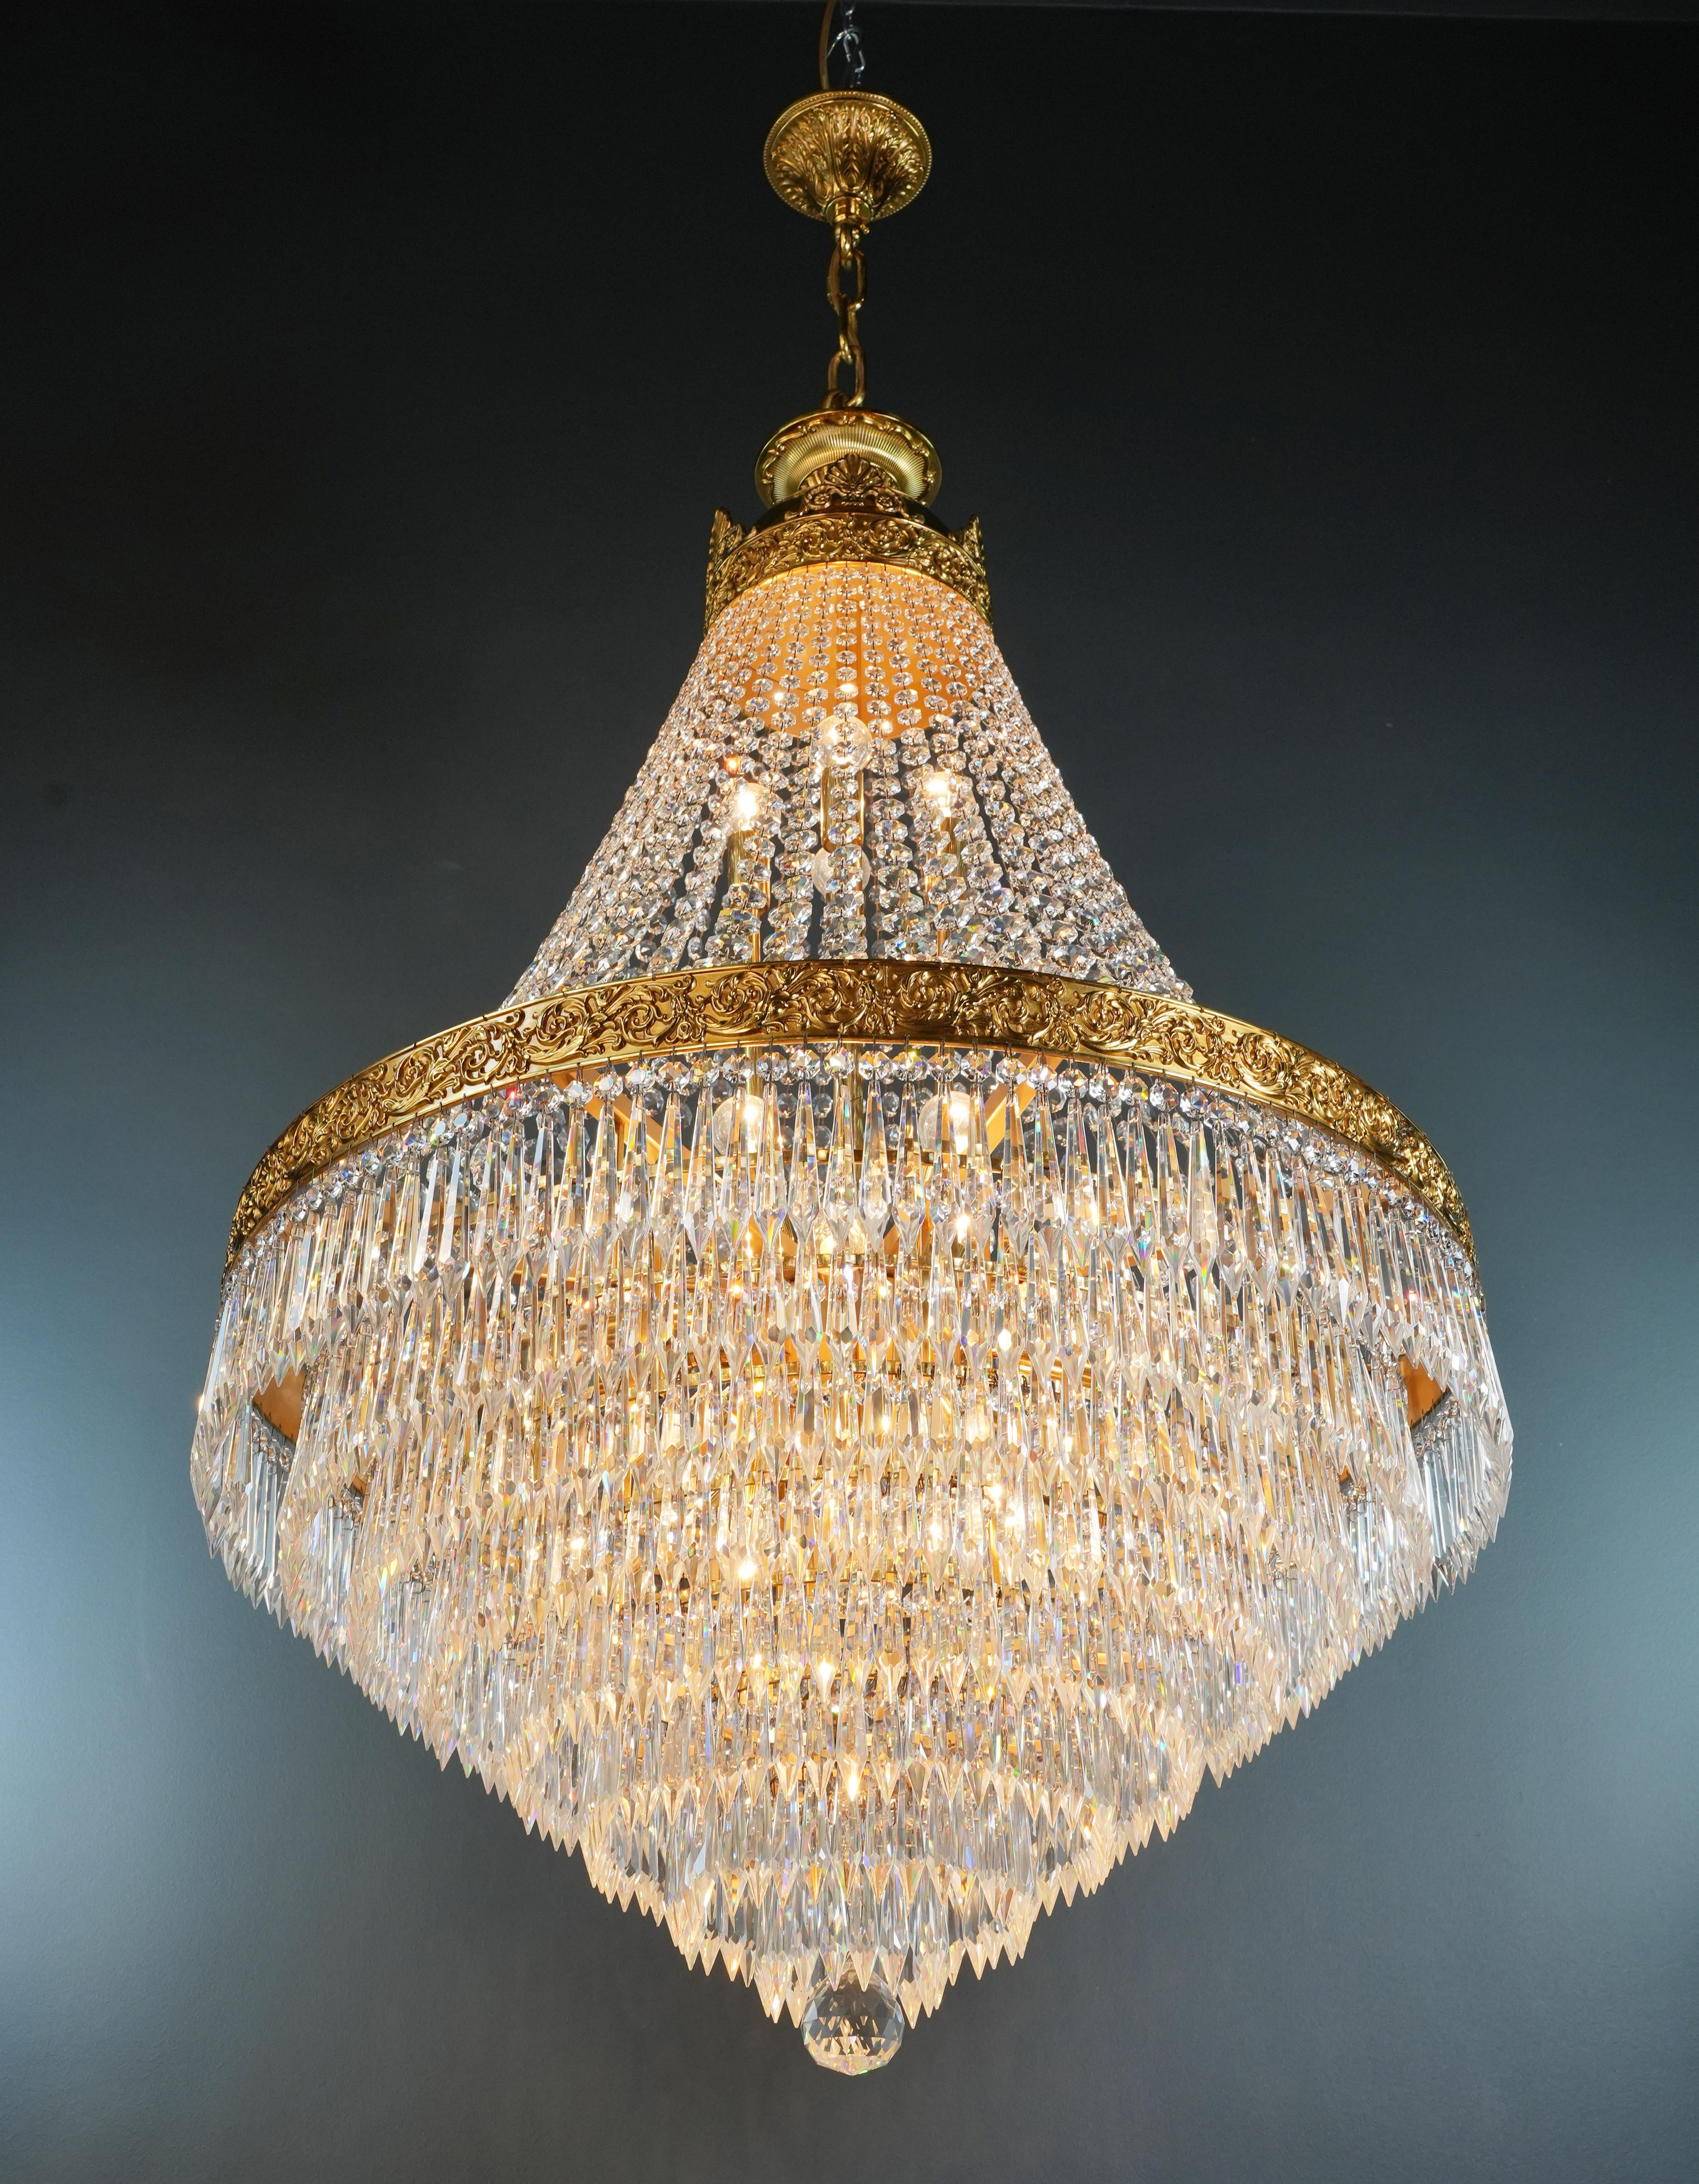 German Brass Basket Empire Sac a Pearl Chandelier Crystal Lustre Lamp Antique Gold 2 For Sale